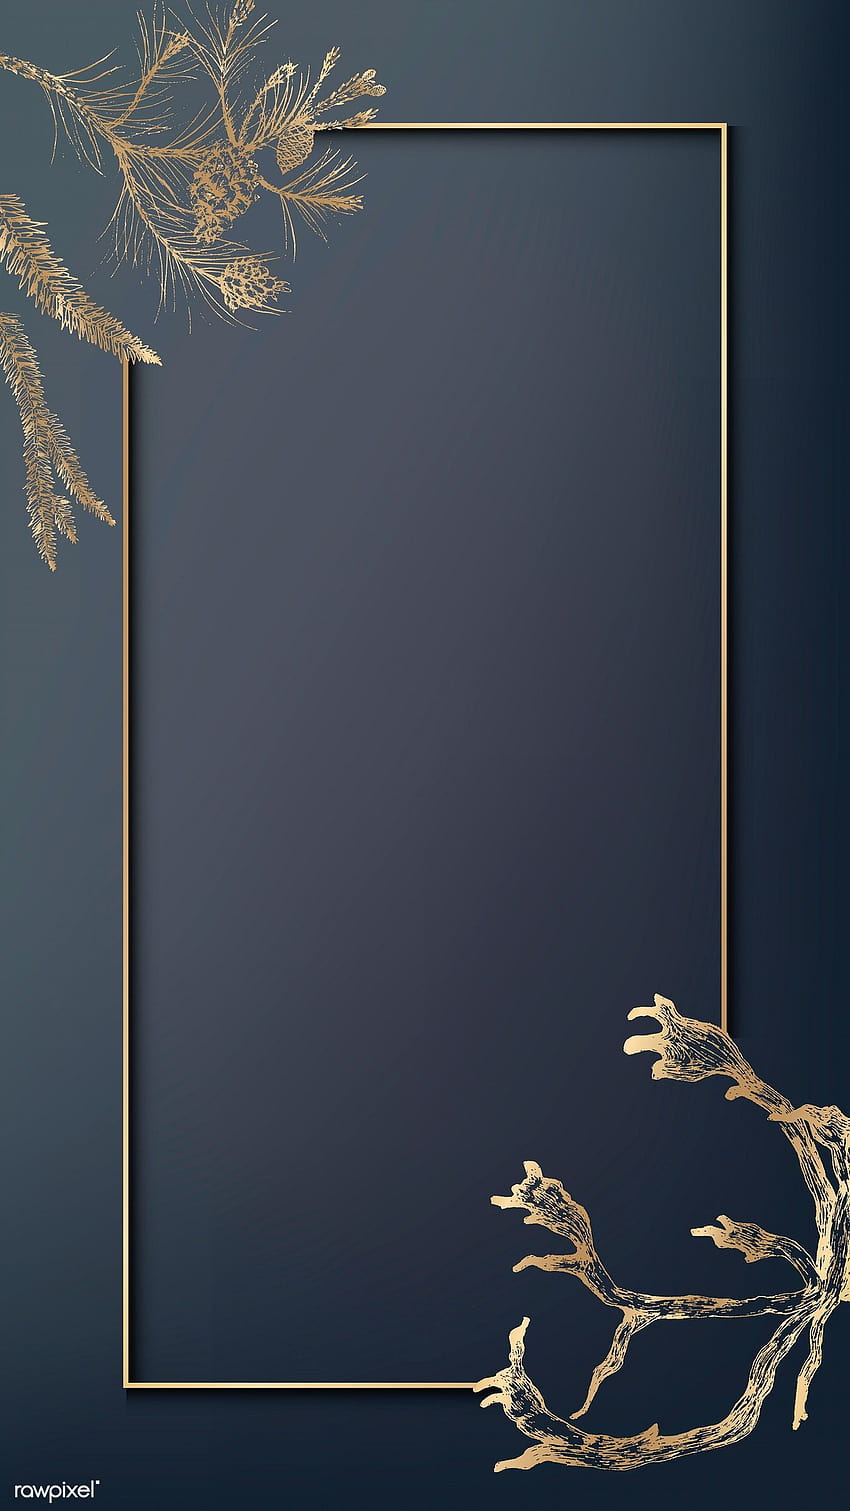 vector premium de marco dorado decorado con cuernos de teléfono móvil, marco fondo de pantalla del teléfono